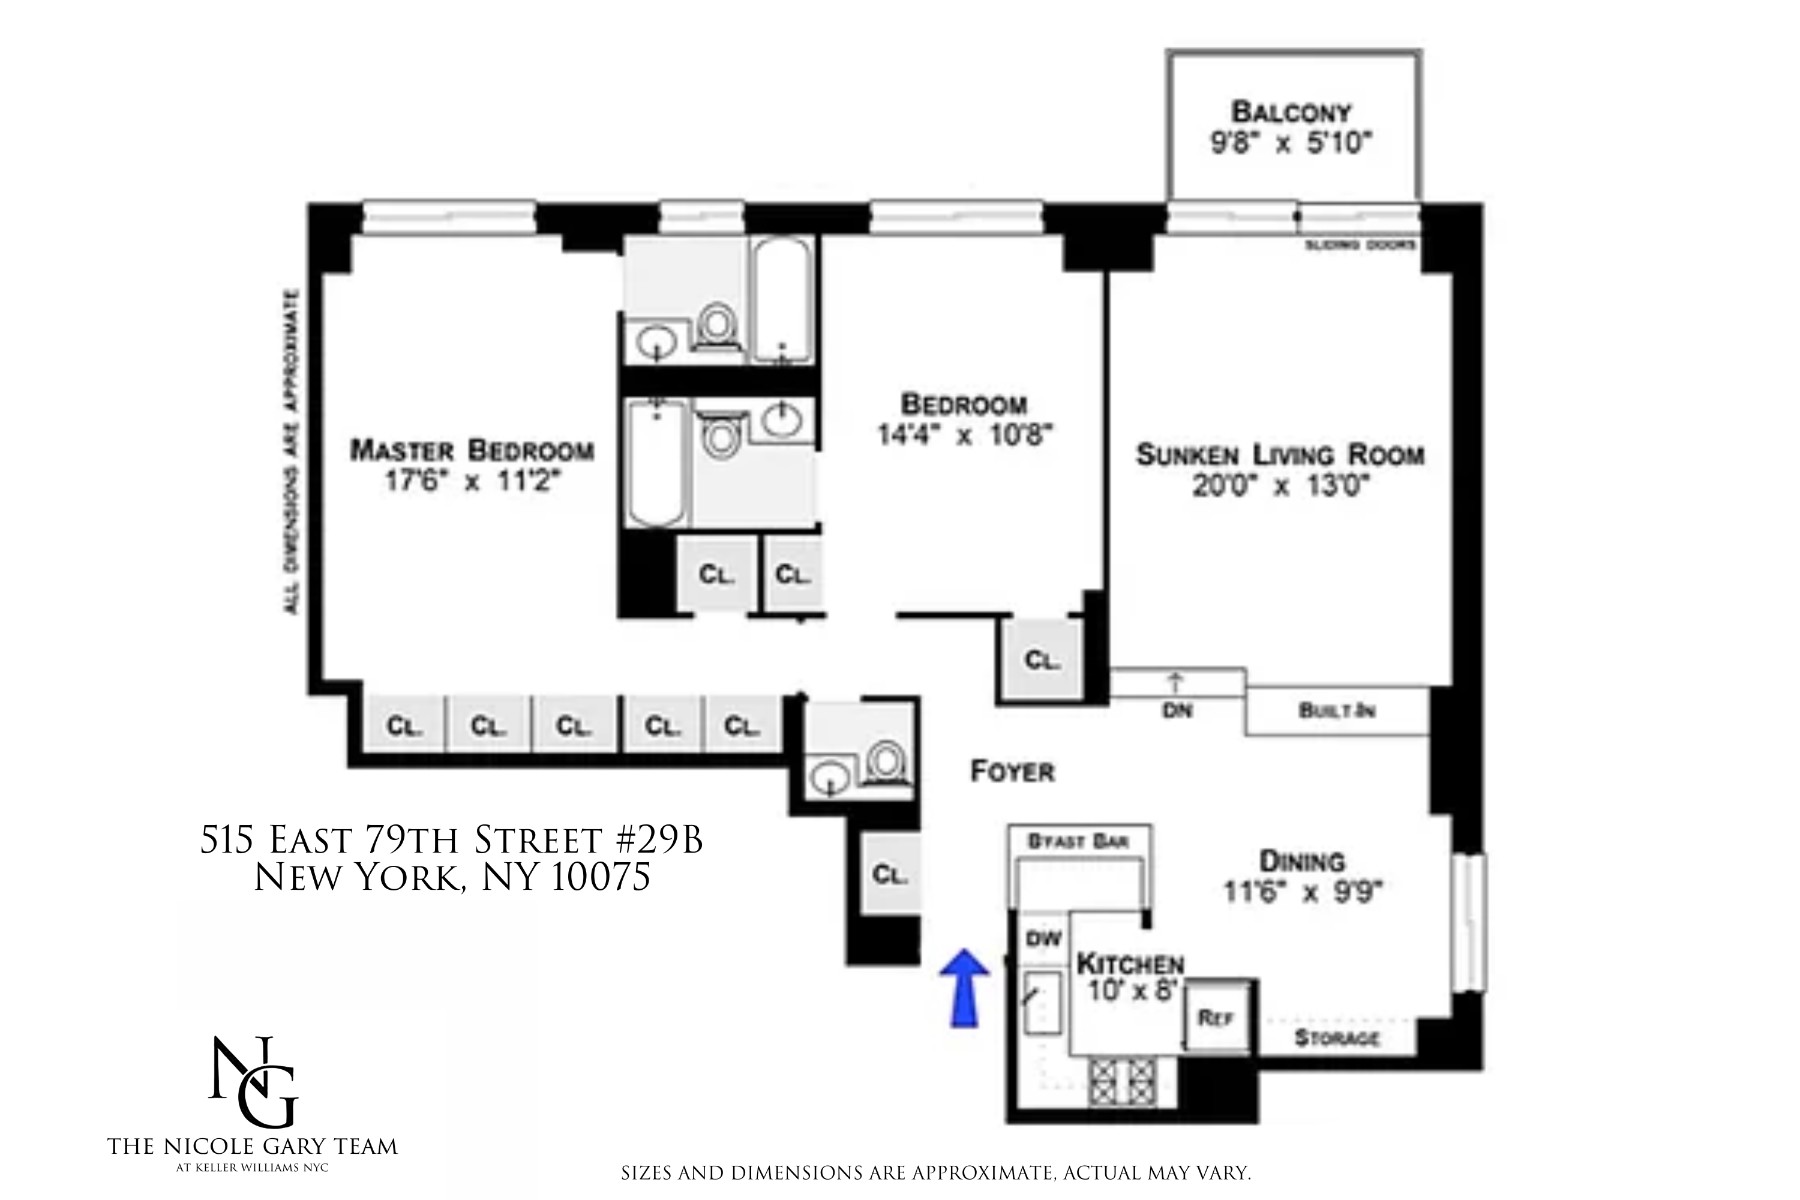 Floorplan for 515 East 79th Street, 29B